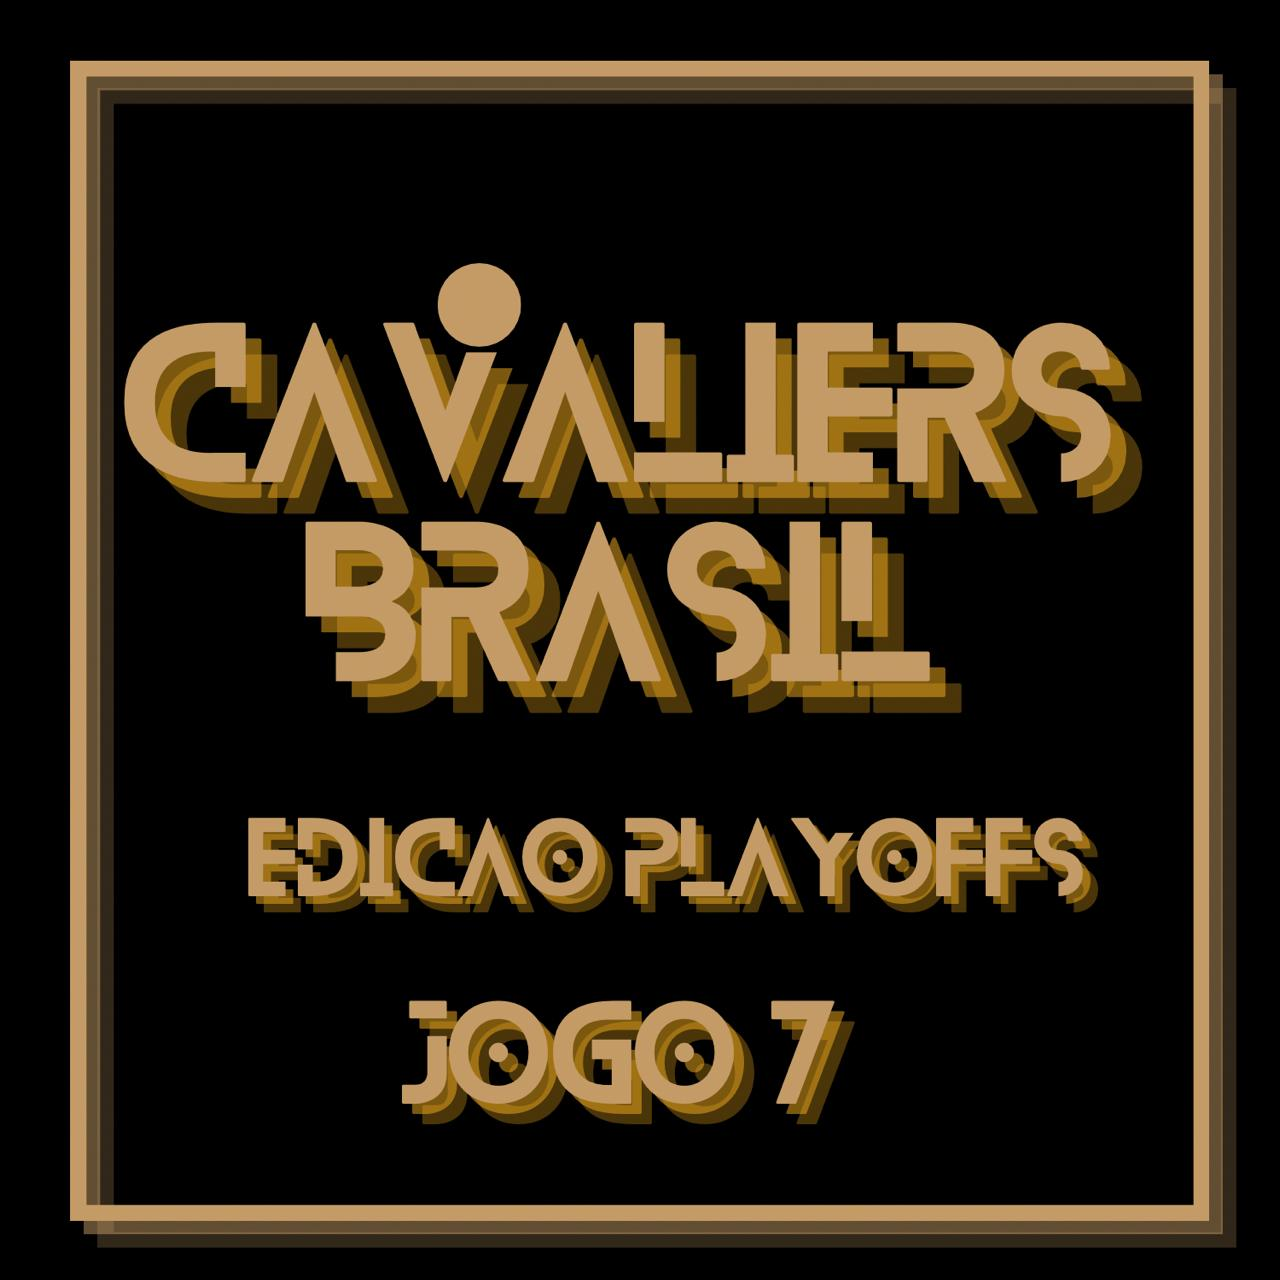 Cavaliers Brasil Especial Playoffs - Vamos para a Segunda Rodada!